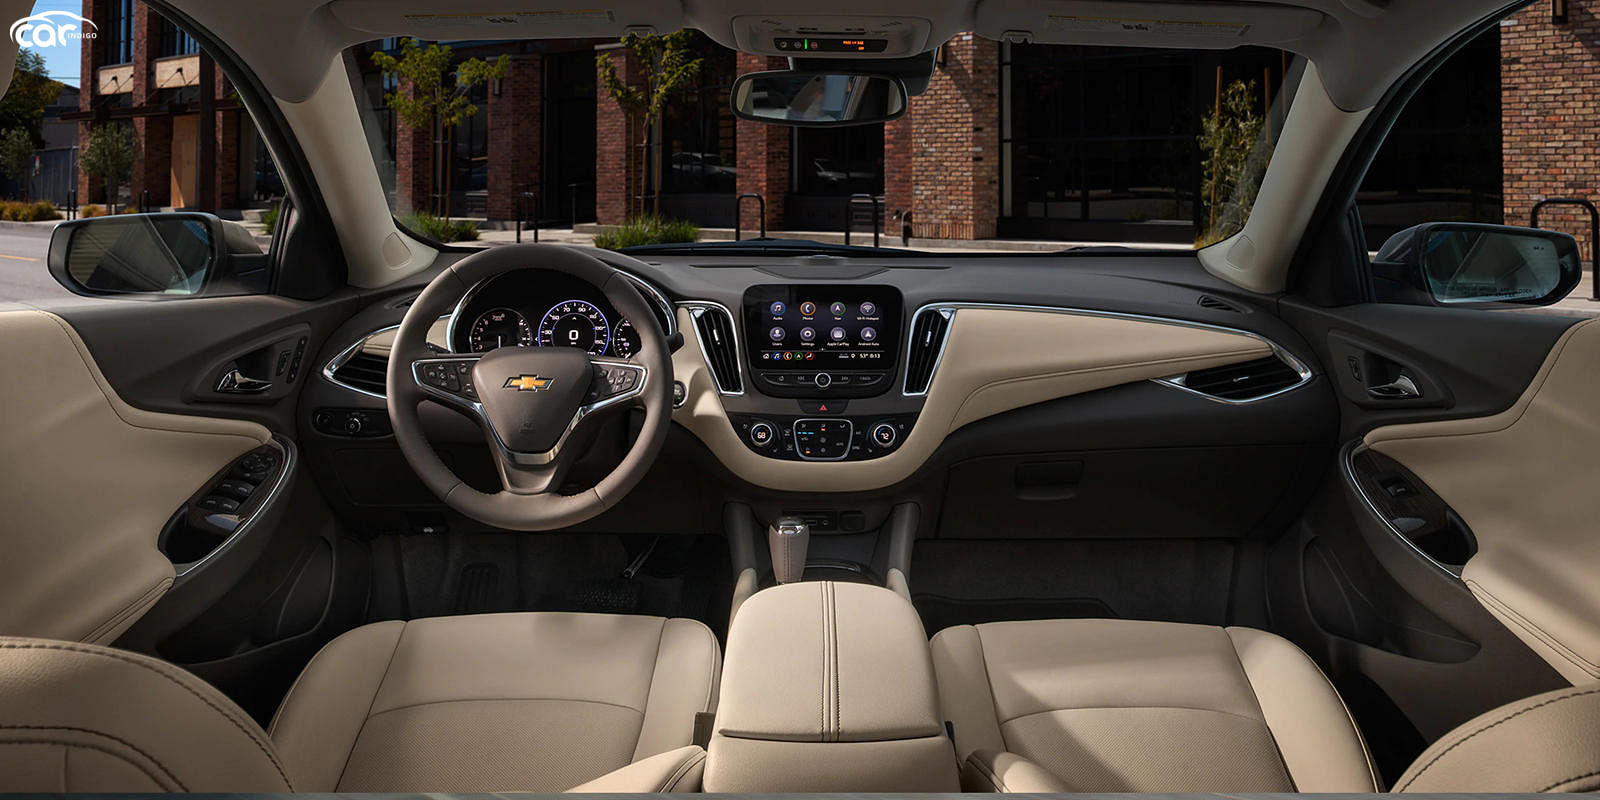 2022 Chevrolet Malibu Interior Review Seating, Infotainment